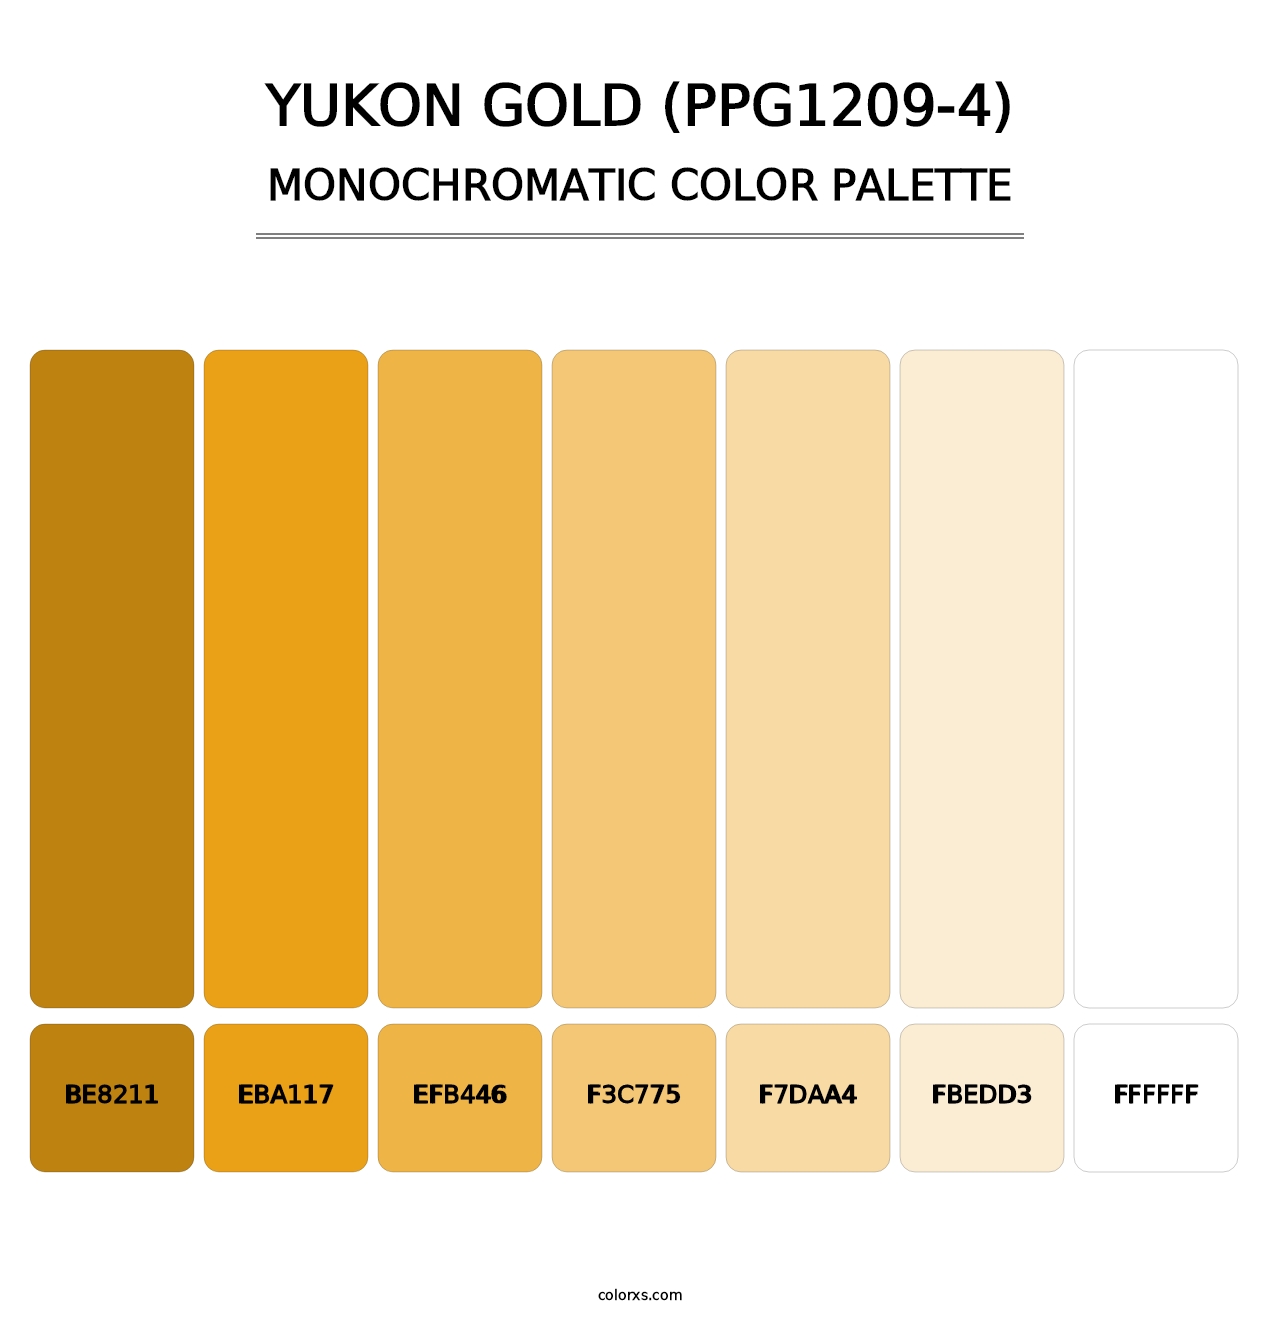 Yukon Gold (PPG1209-4) - Monochromatic Color Palette